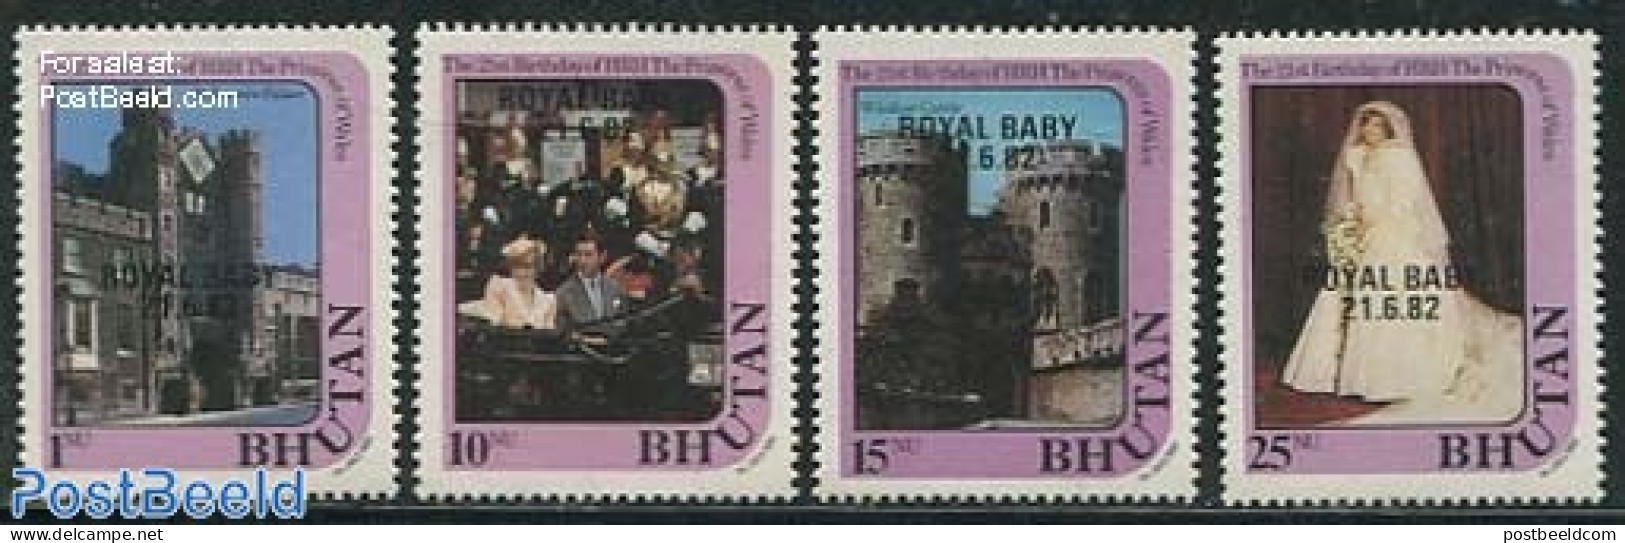 Bhutan 1982 Birth Of William 4v, Mint NH, History - Charles & Diana - Kings & Queens (Royalty) - Royalties, Royals